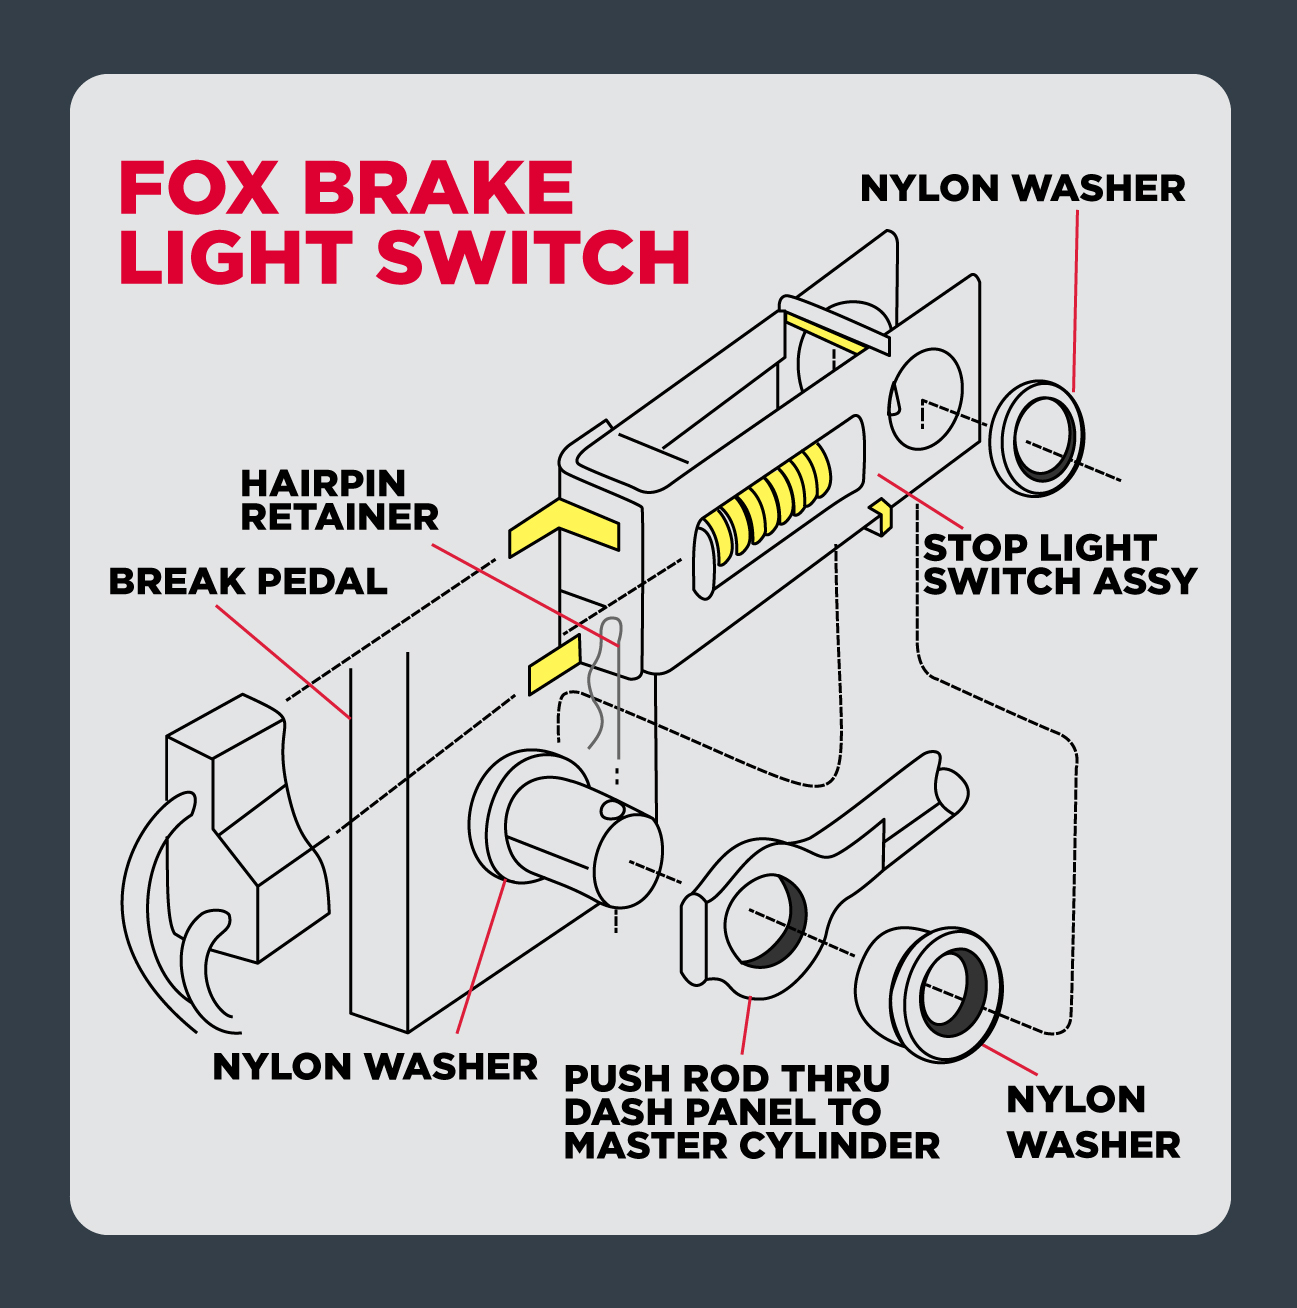 How To Install Fox Body Brake Light Switch | 1980-93 Mustang - How To Install Fox Body Brake Light Switch | 1980-93 Mustang